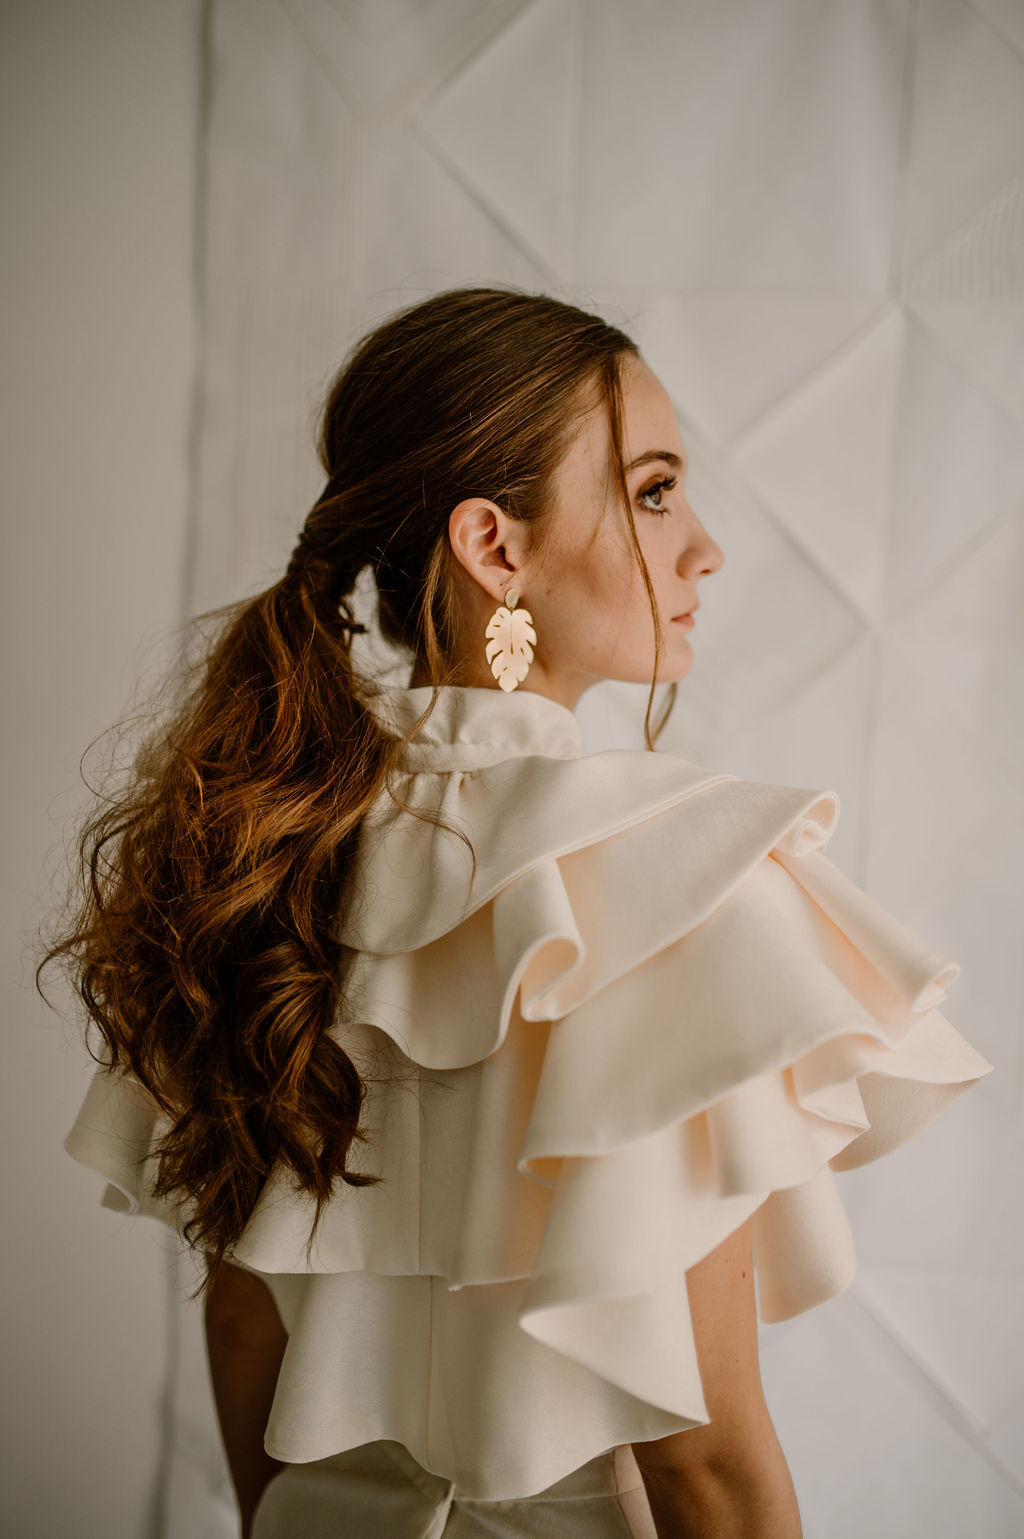 Nikita Nipone Collection 2020 - Robes de mariée - Blog Mariage Madame C